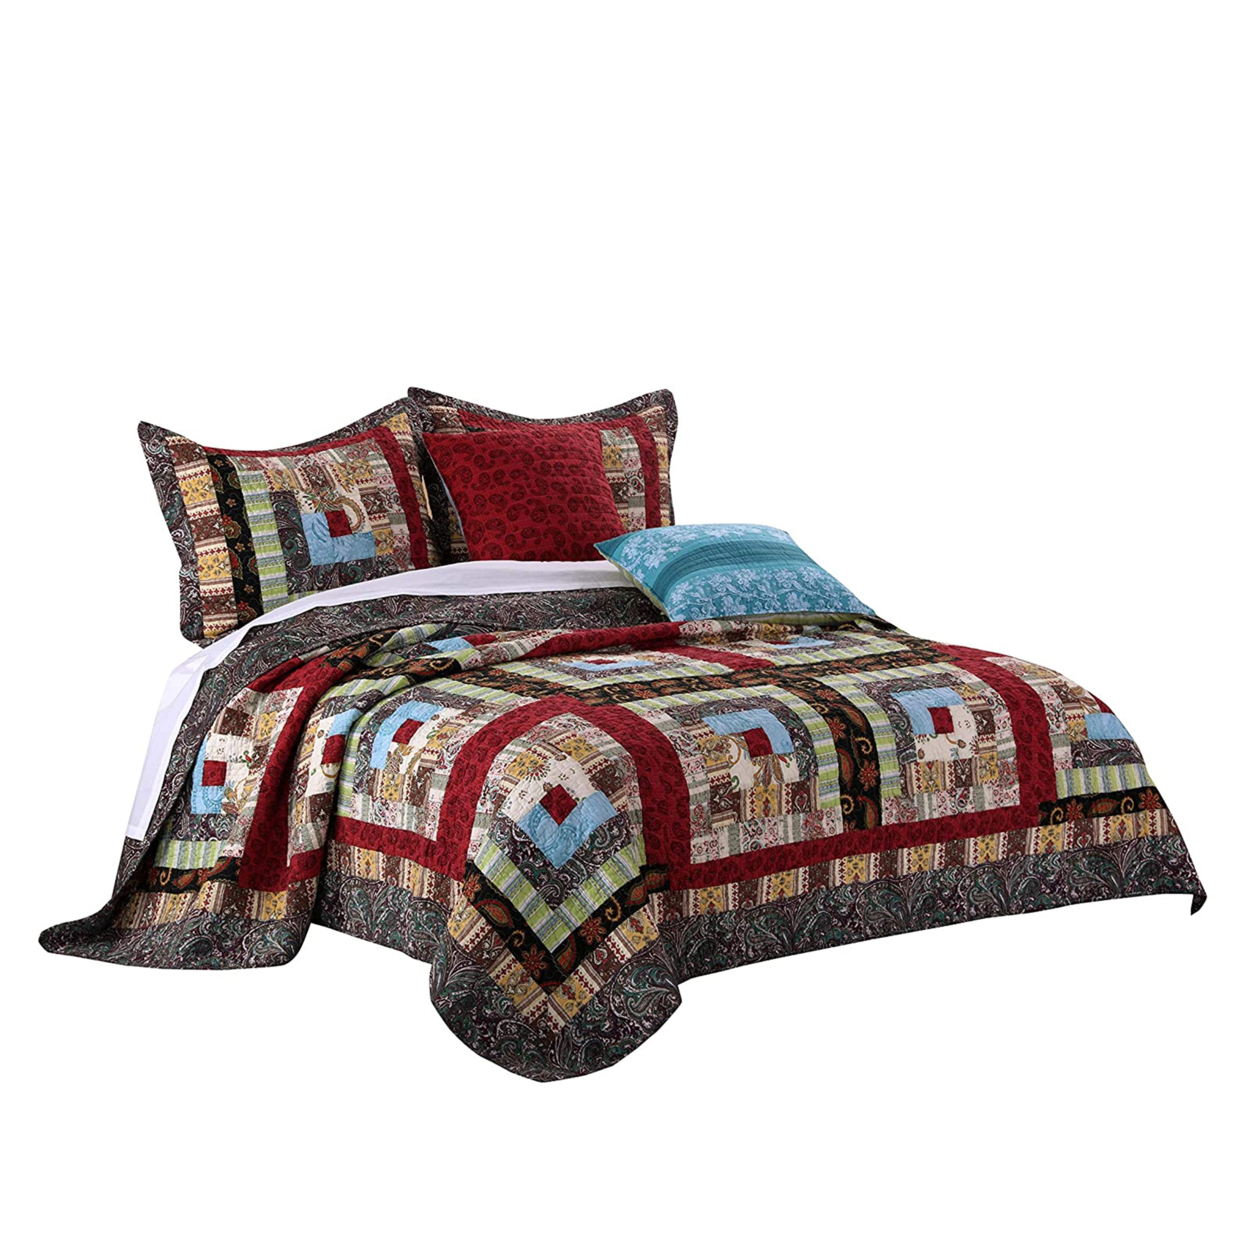 Thames 5 Piece Queen Size Cotton Quilt Set With Log Cabin Pattern, Multicolor- Saltoro Sherpi